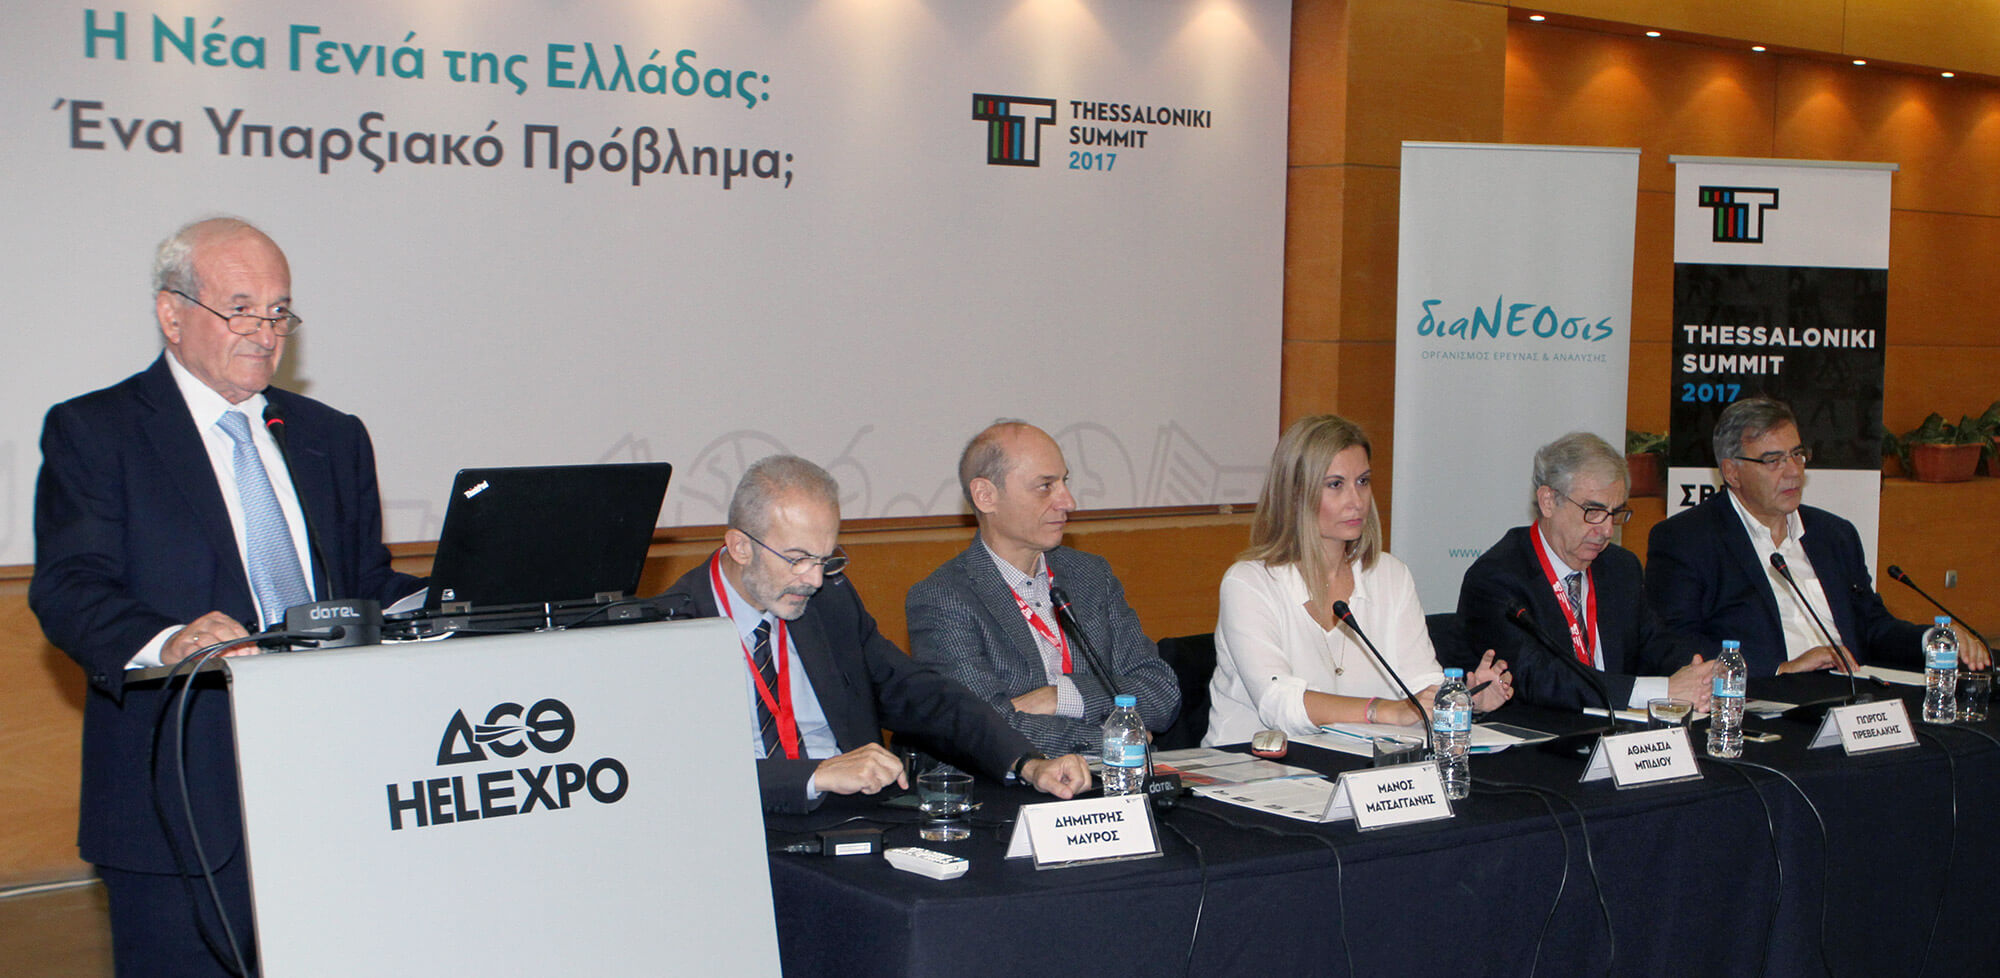 Mια εκδήλωση με αφορμή την πρόσφατη έρευνα της διαΝΕΟσις που πραγματοποιήθηκε στο πλαίσιο του Thessaloniki Summit 2017.